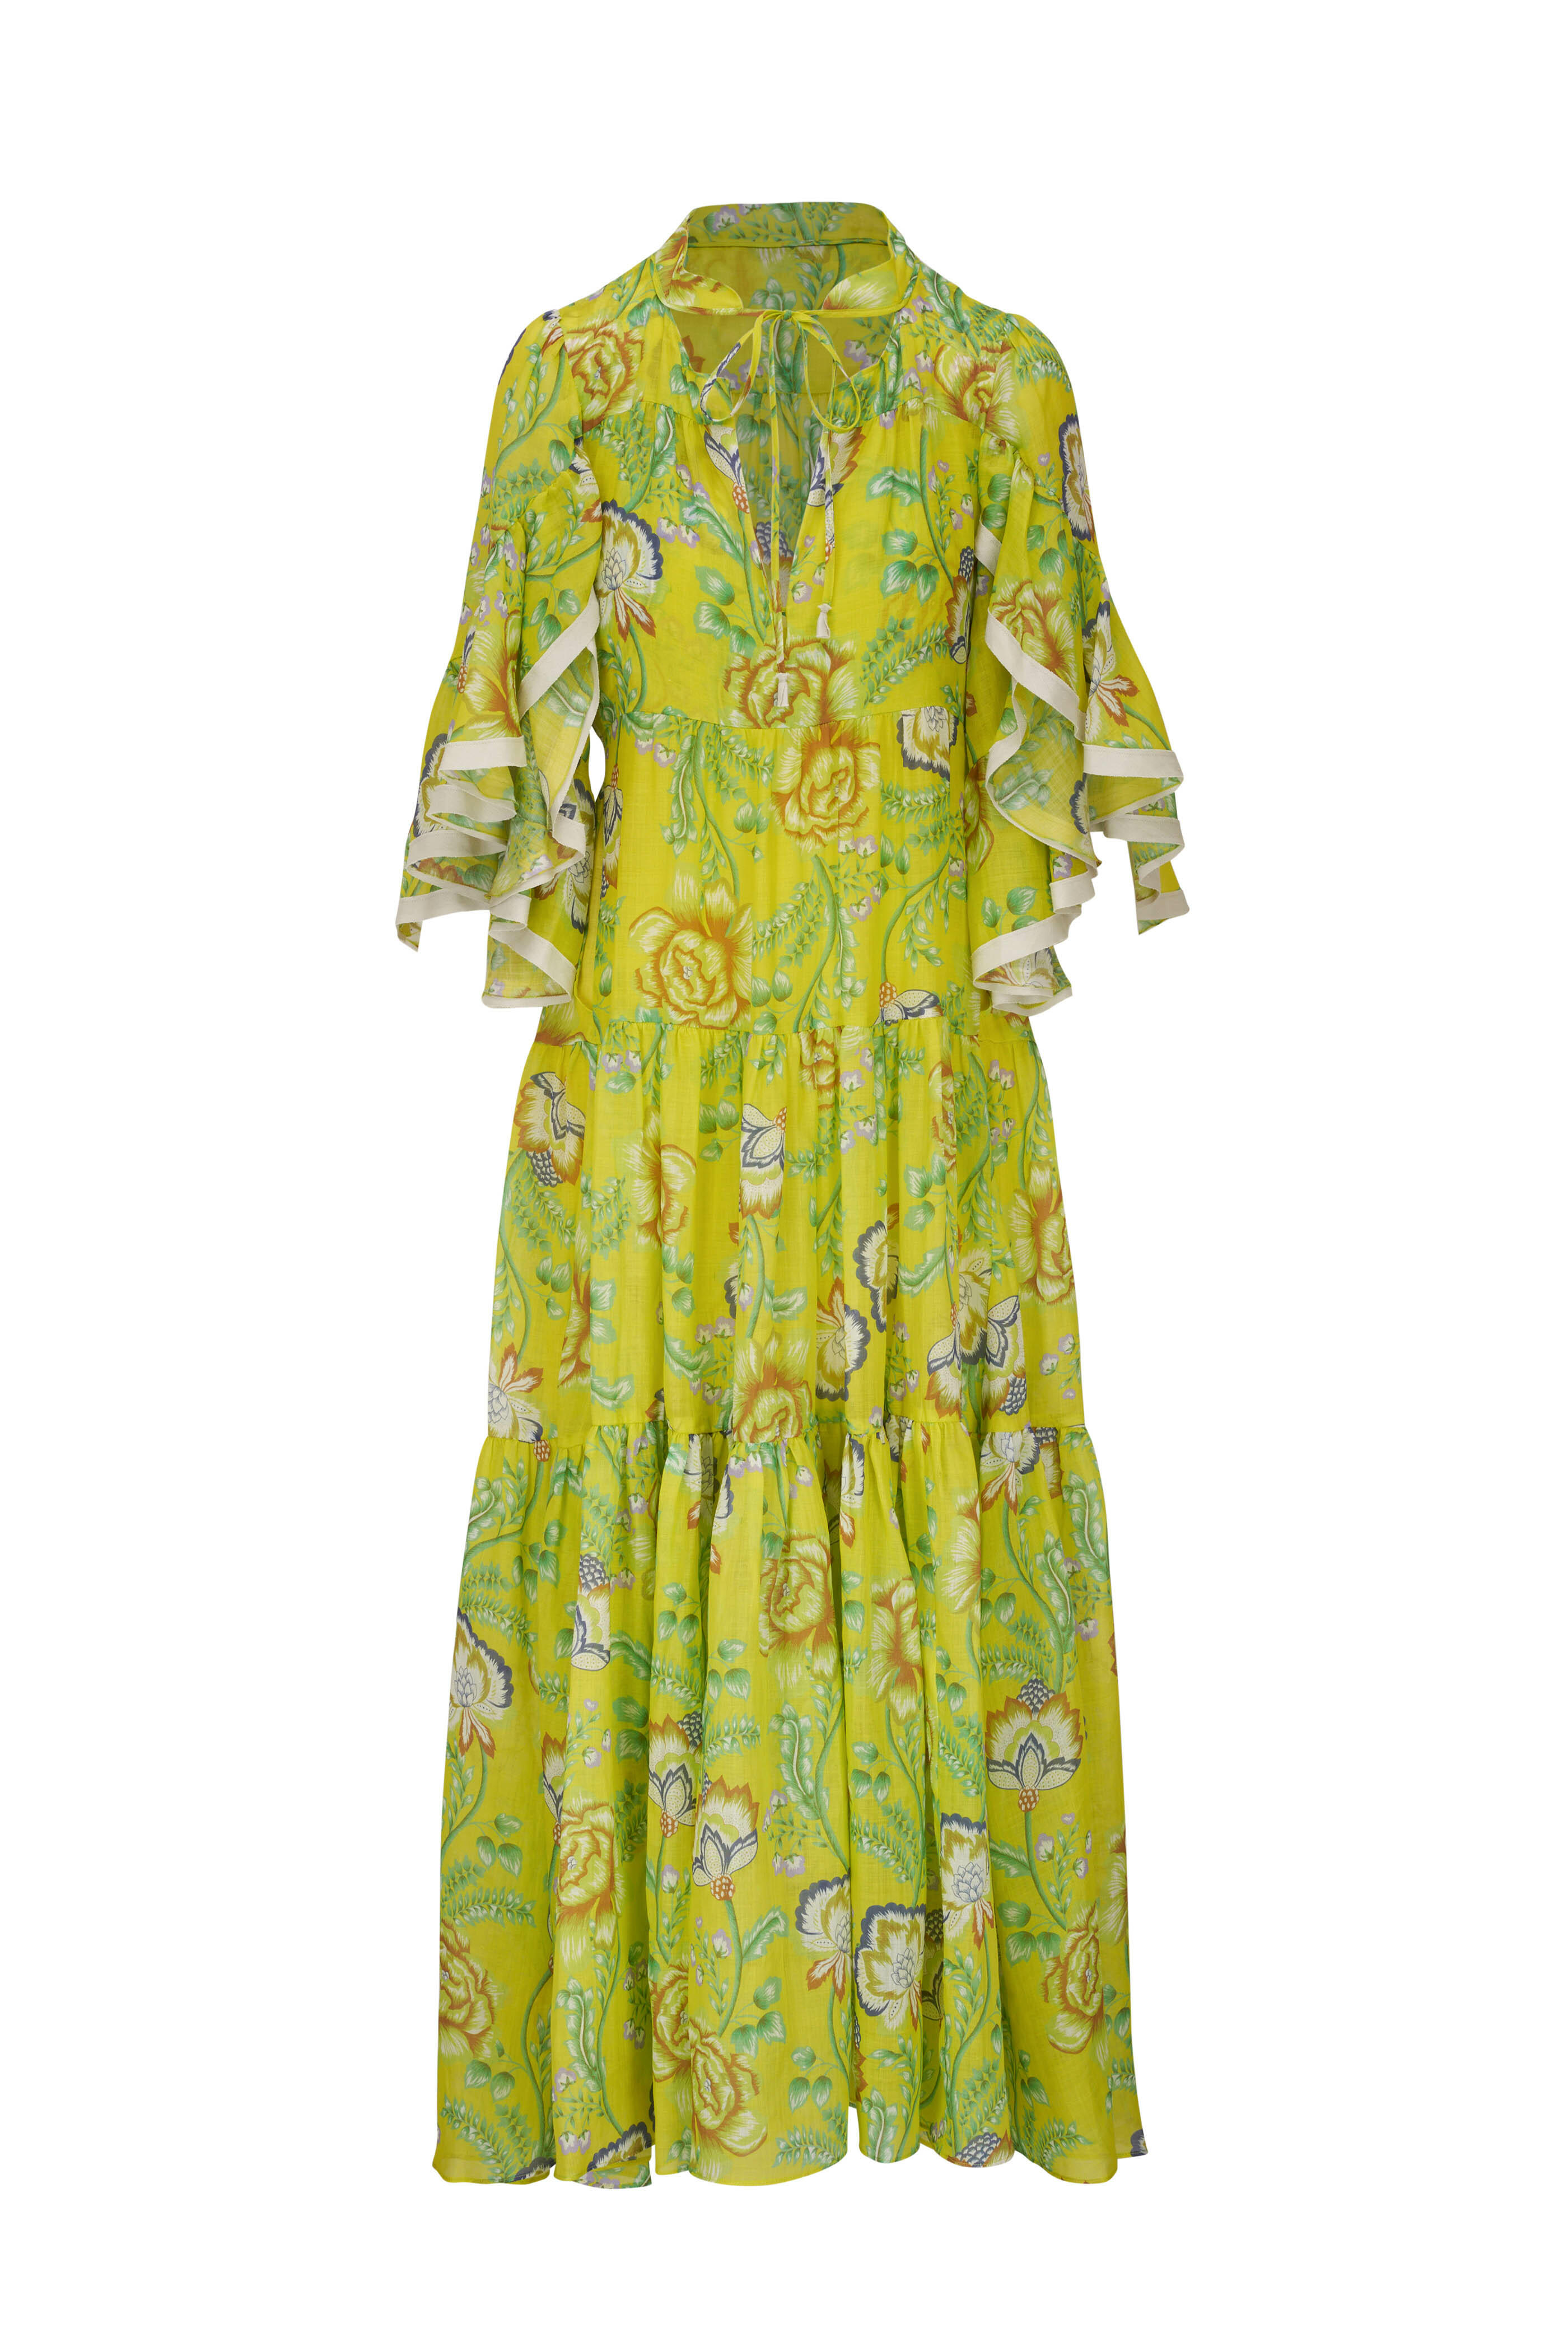 Dorothee Schumacher - Natural Volumes Yellow Floral Ruffle Maxi Dress